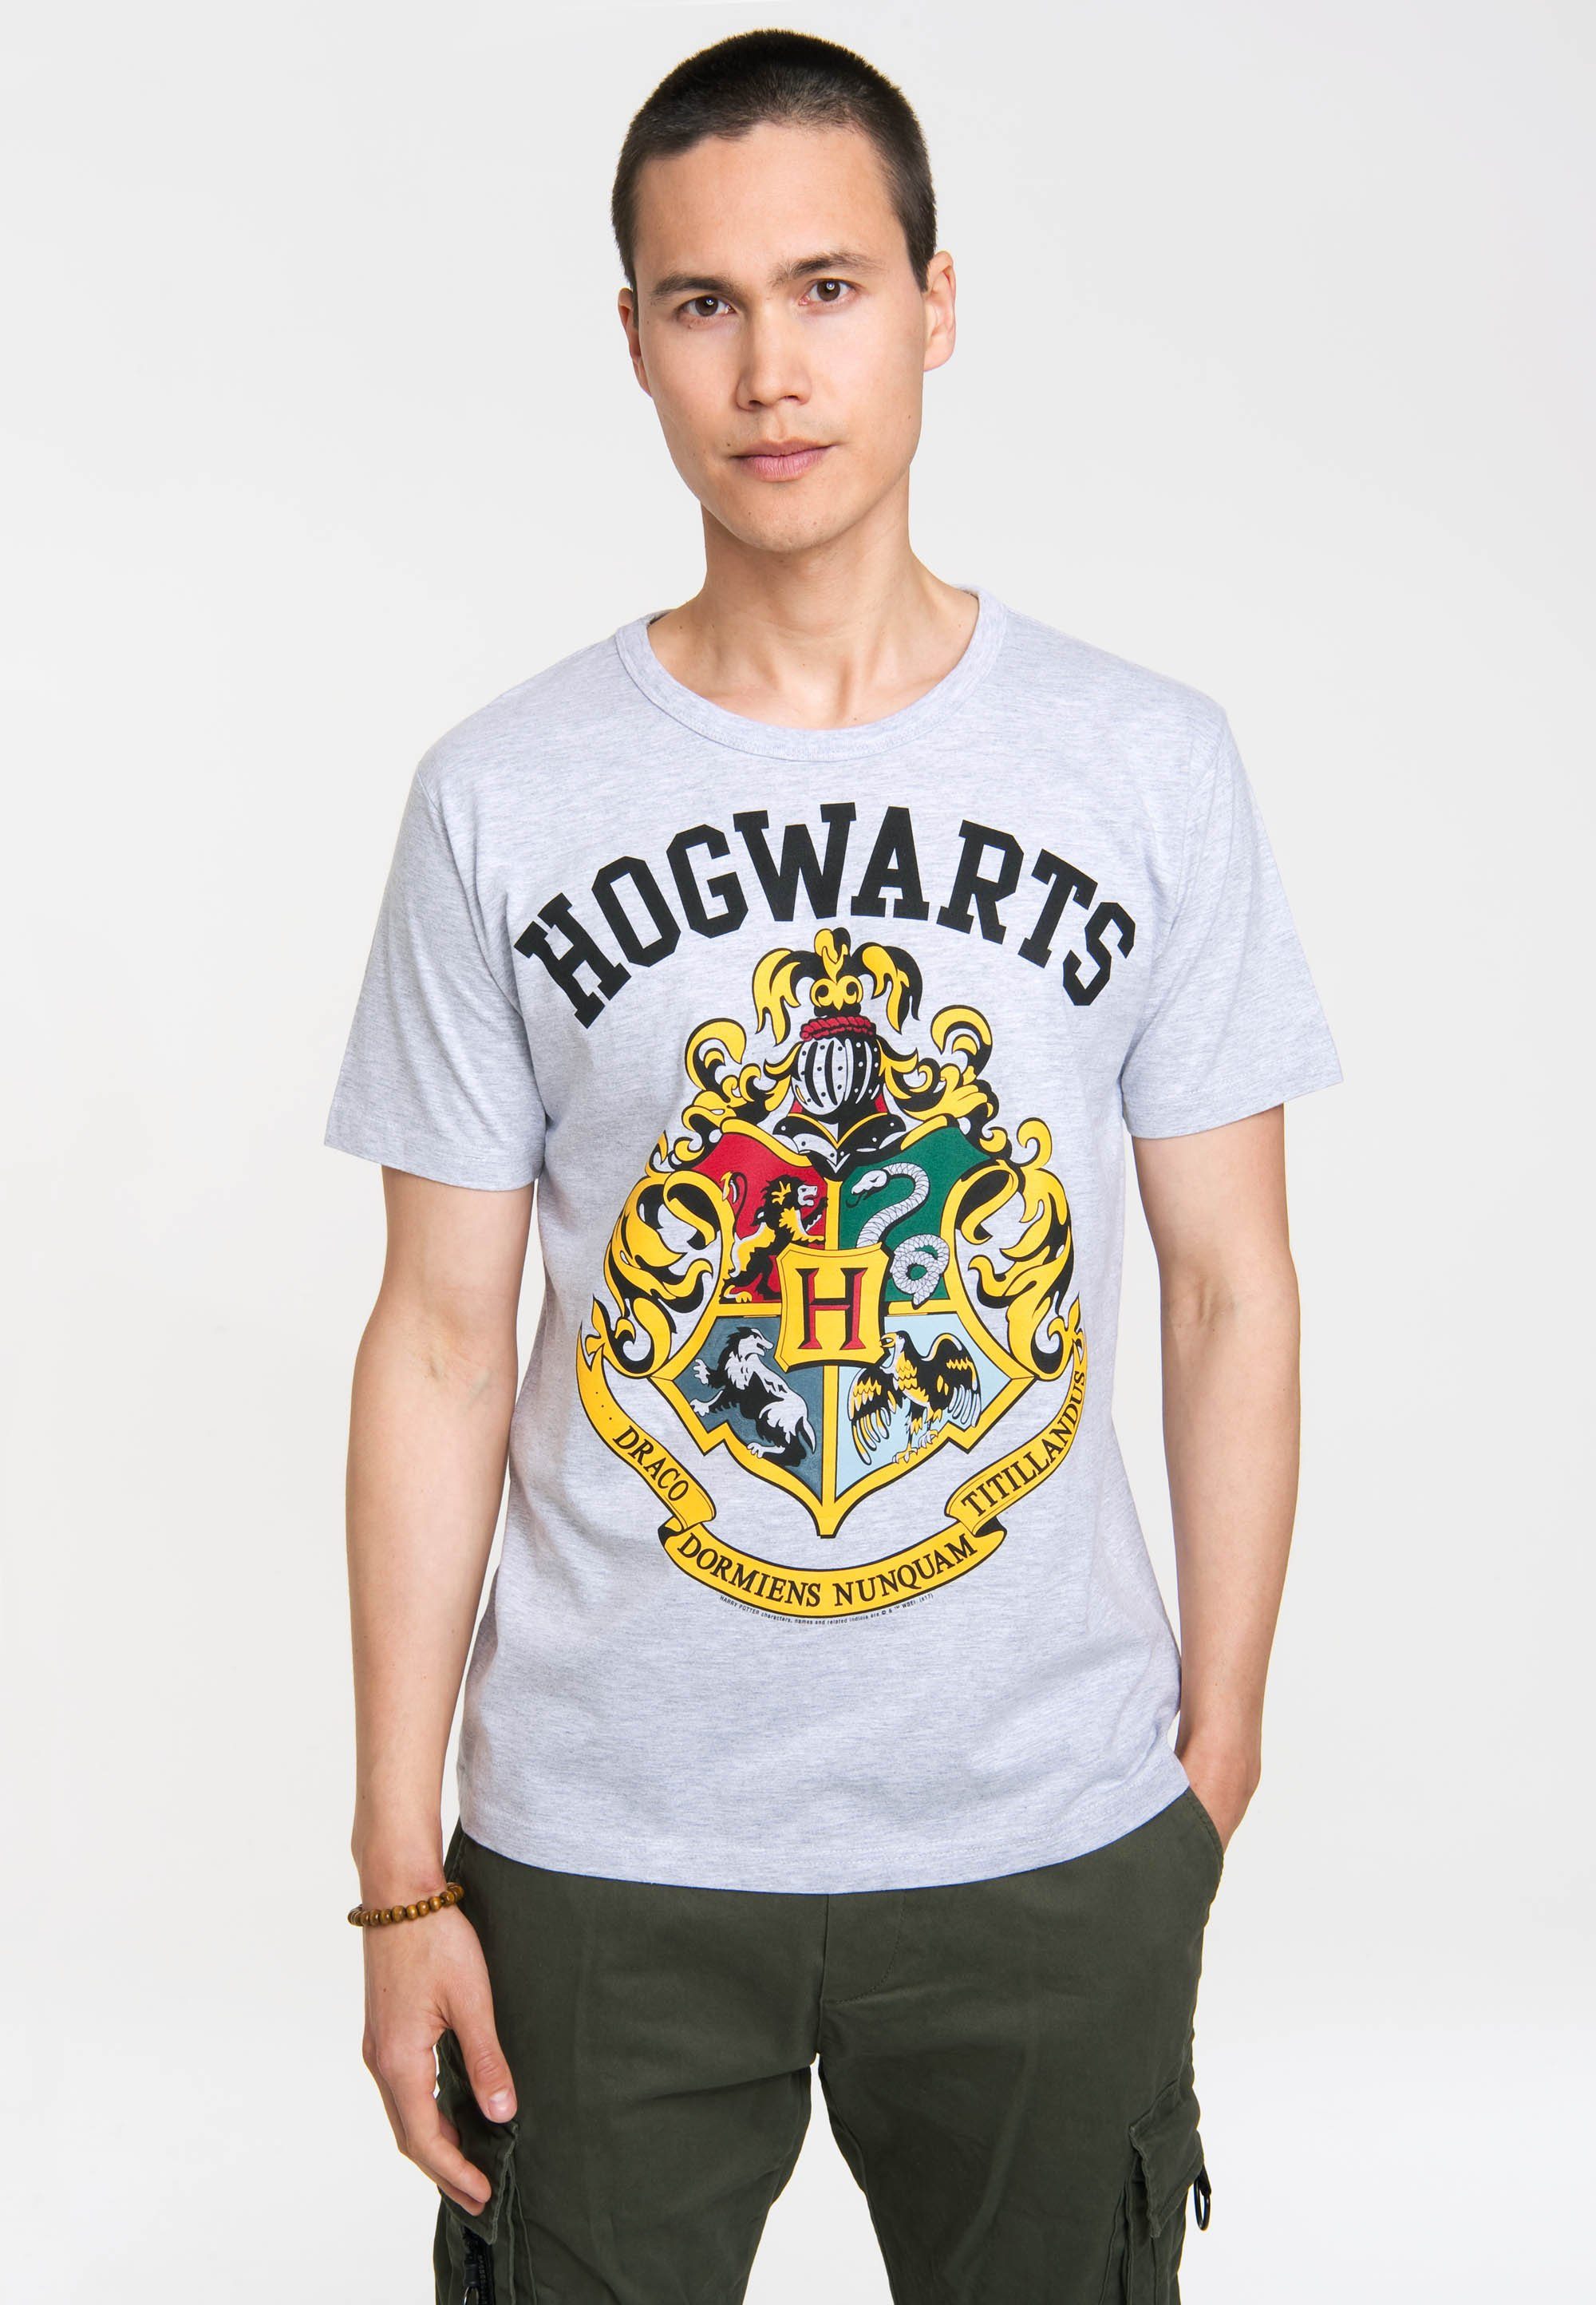 LOGOSHIRT T-Shirt Hogwarts-Logo mit hochwertigem Siebdruck